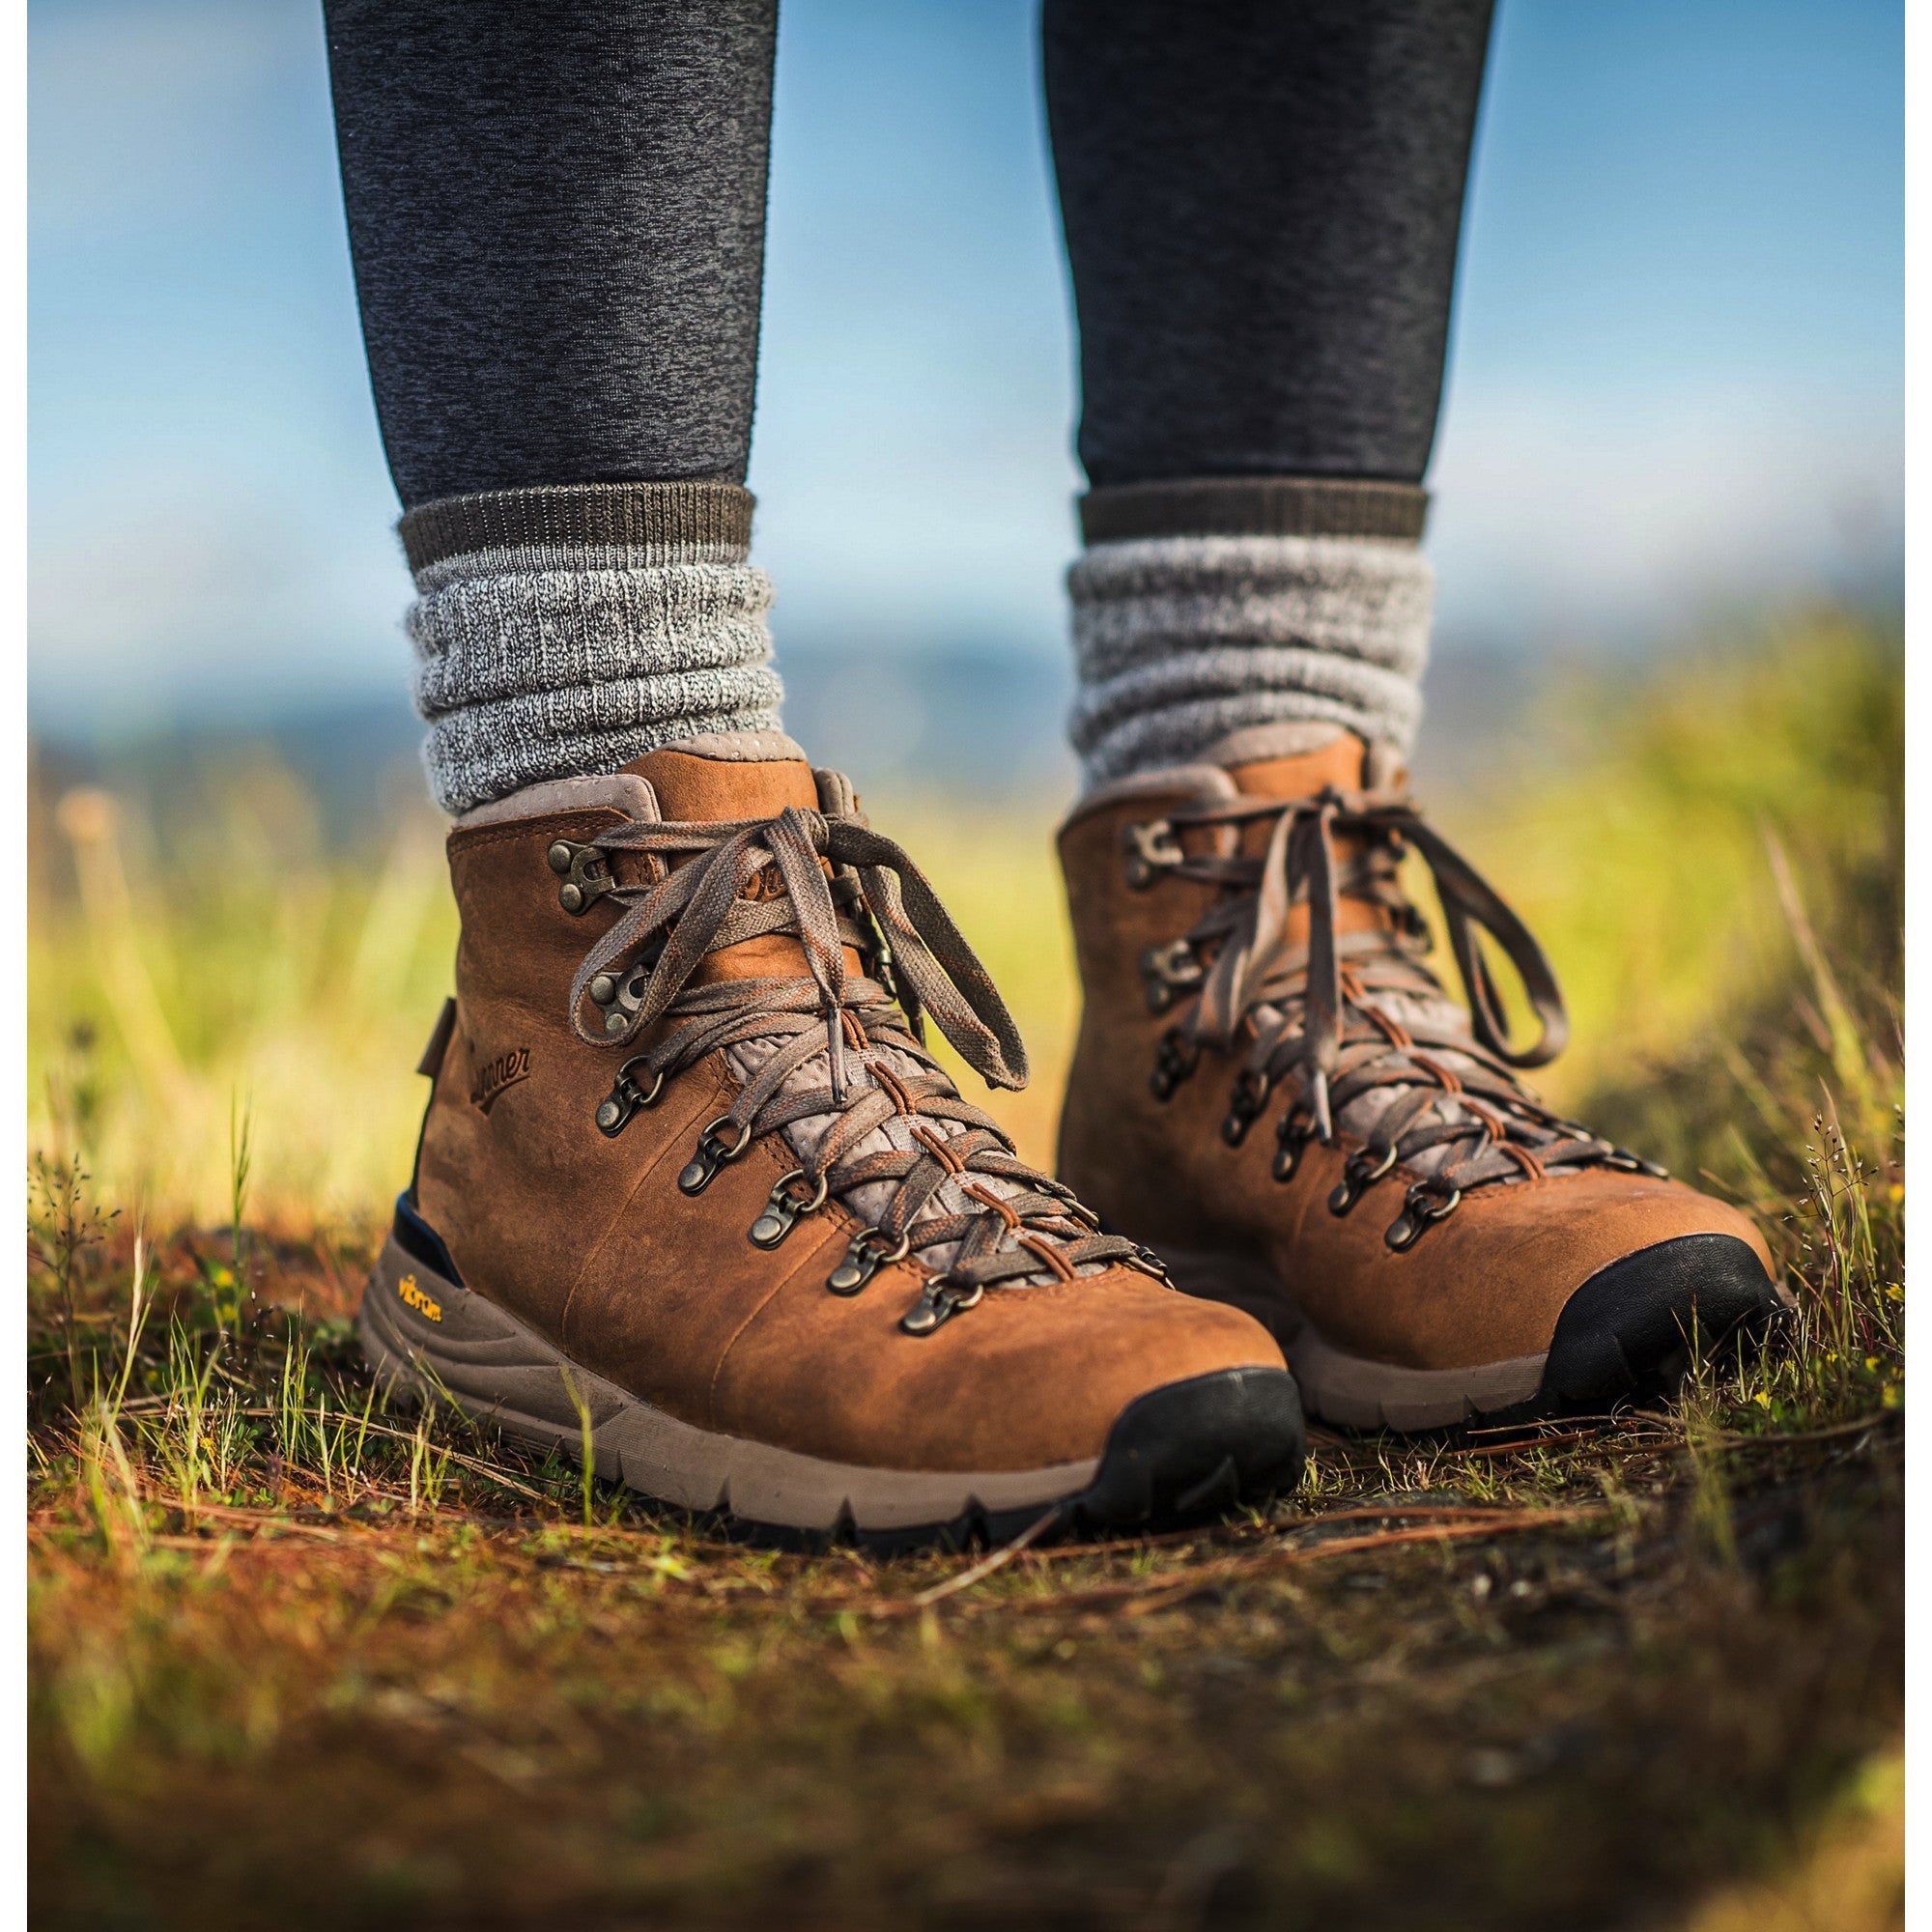 Danner Women's Mountain 600 4.5" WP Hiking Boot - Brown - 62251  - Overlook Boots